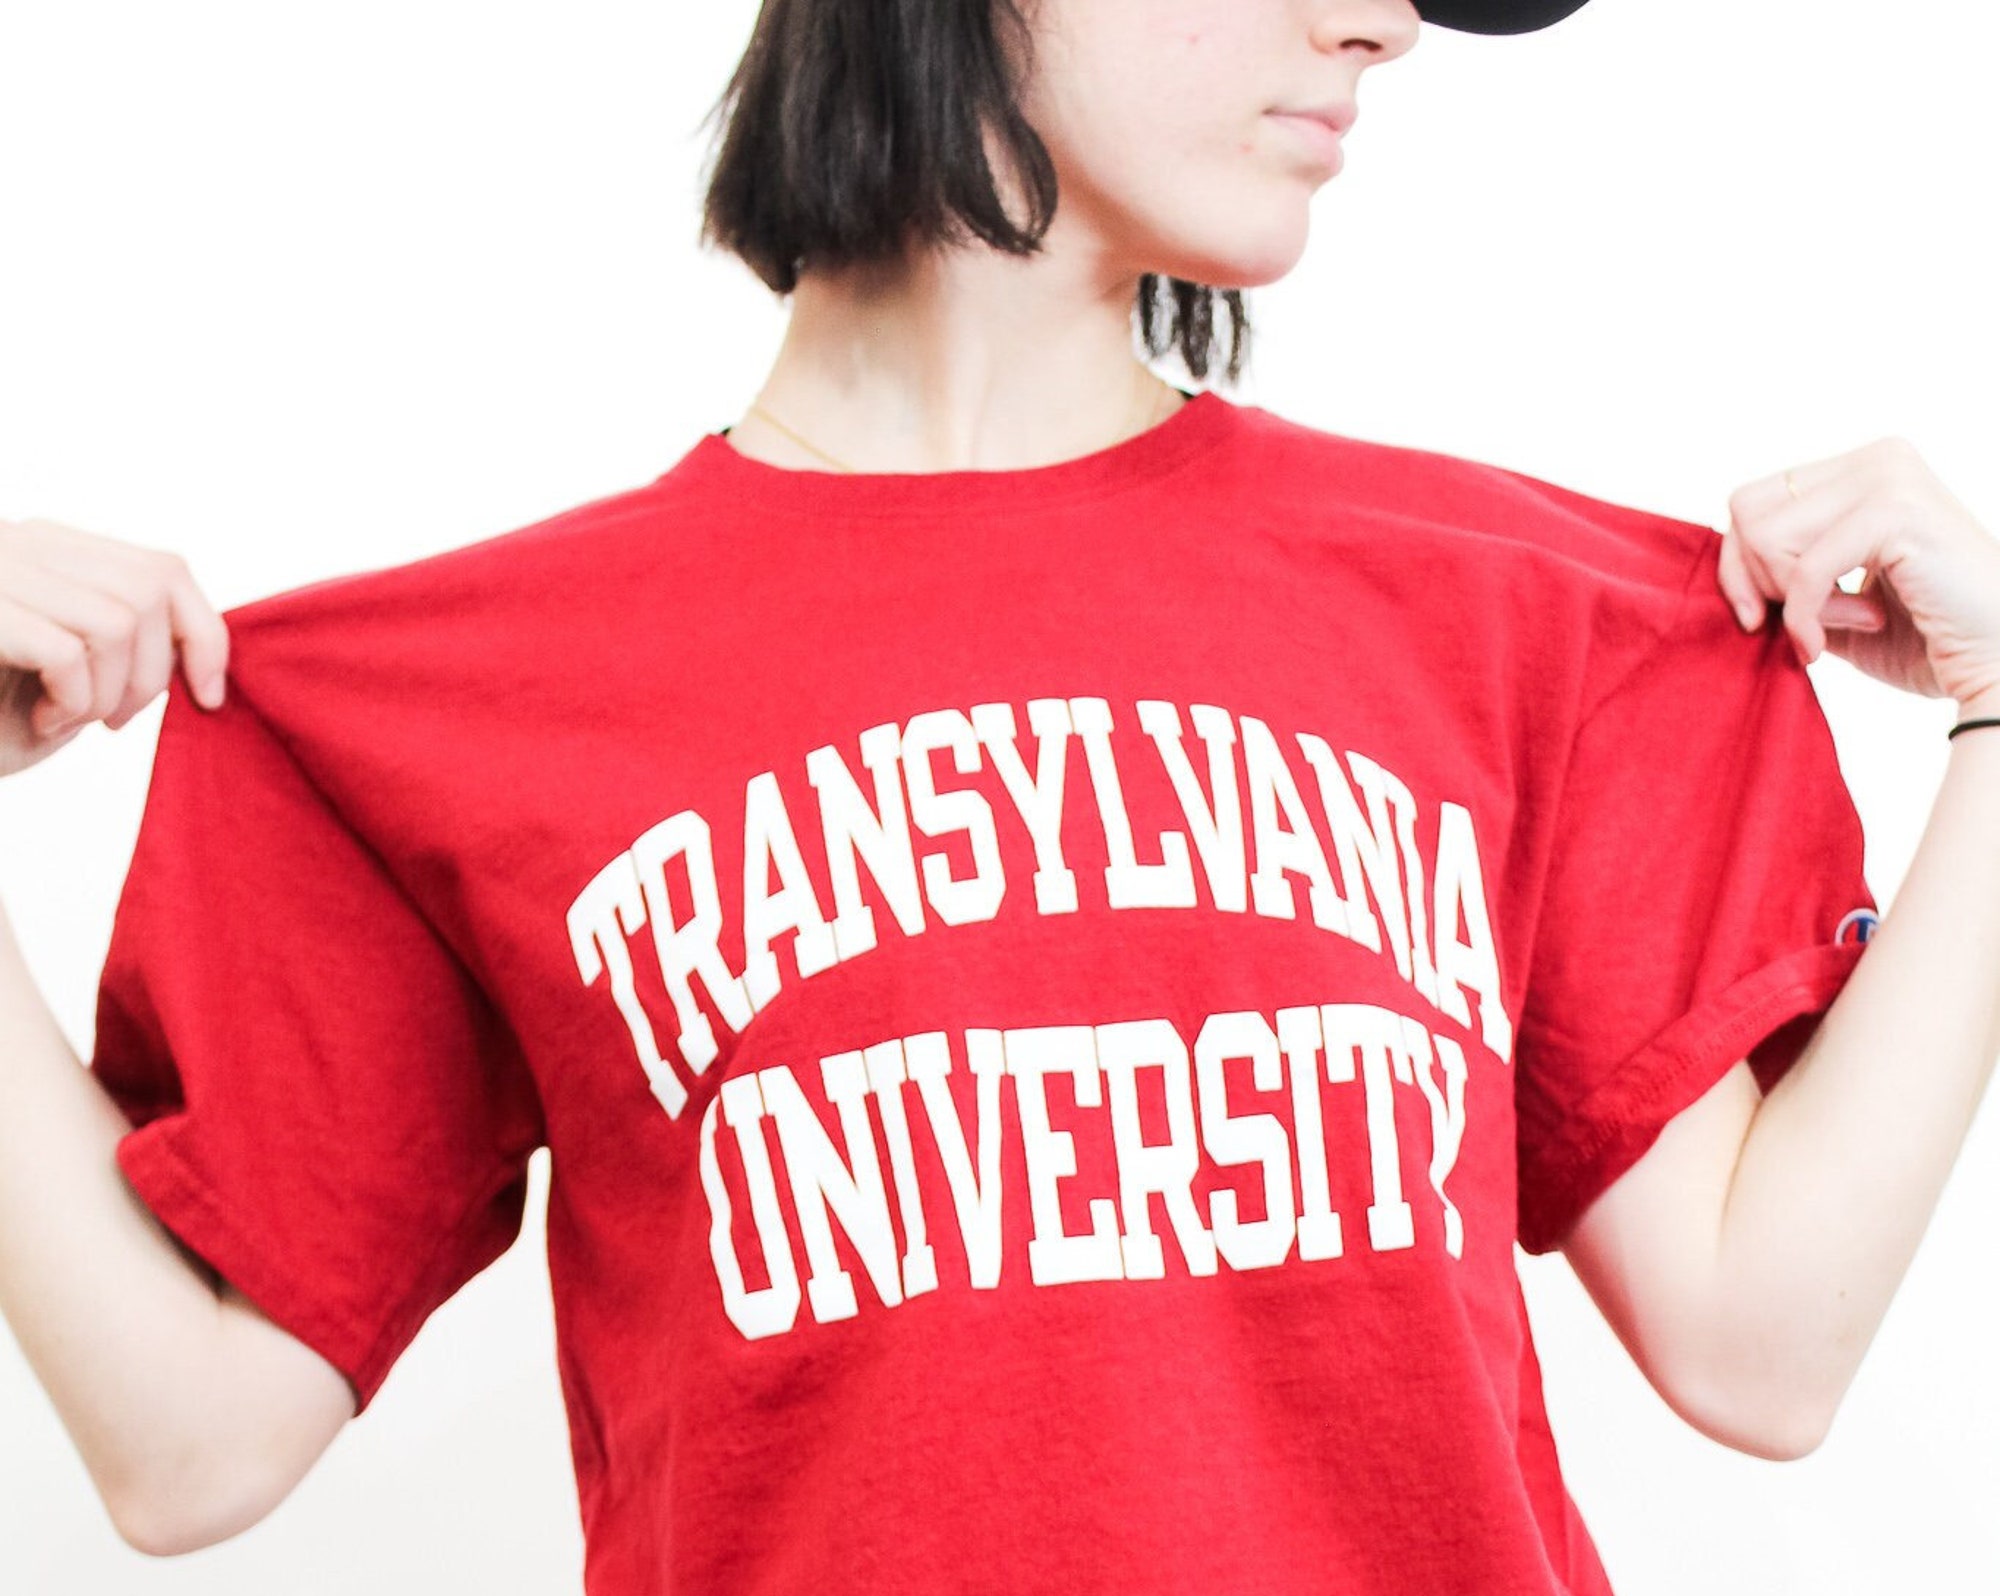 Transylvania University Tee